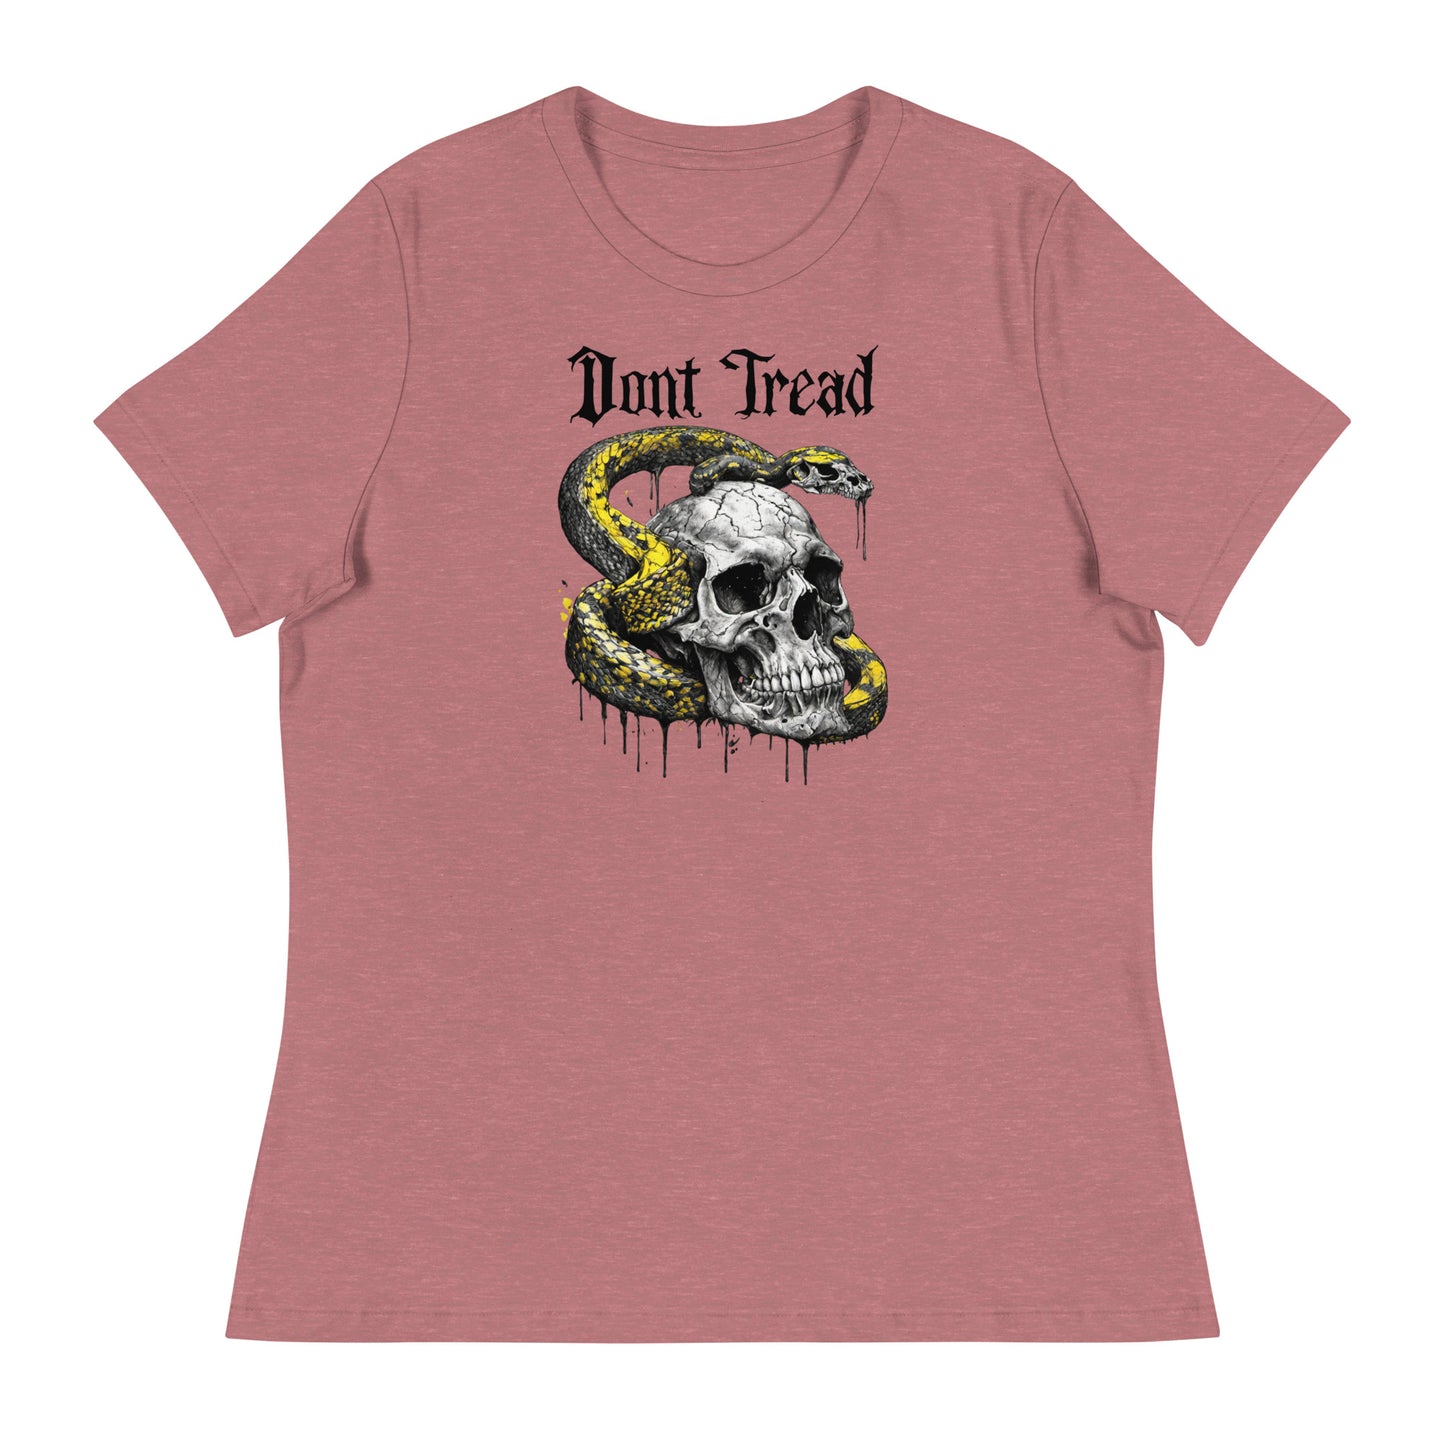 Don't Tread Snake & Skull 2nd Amendment Women's T-Shirt Heather Mauve